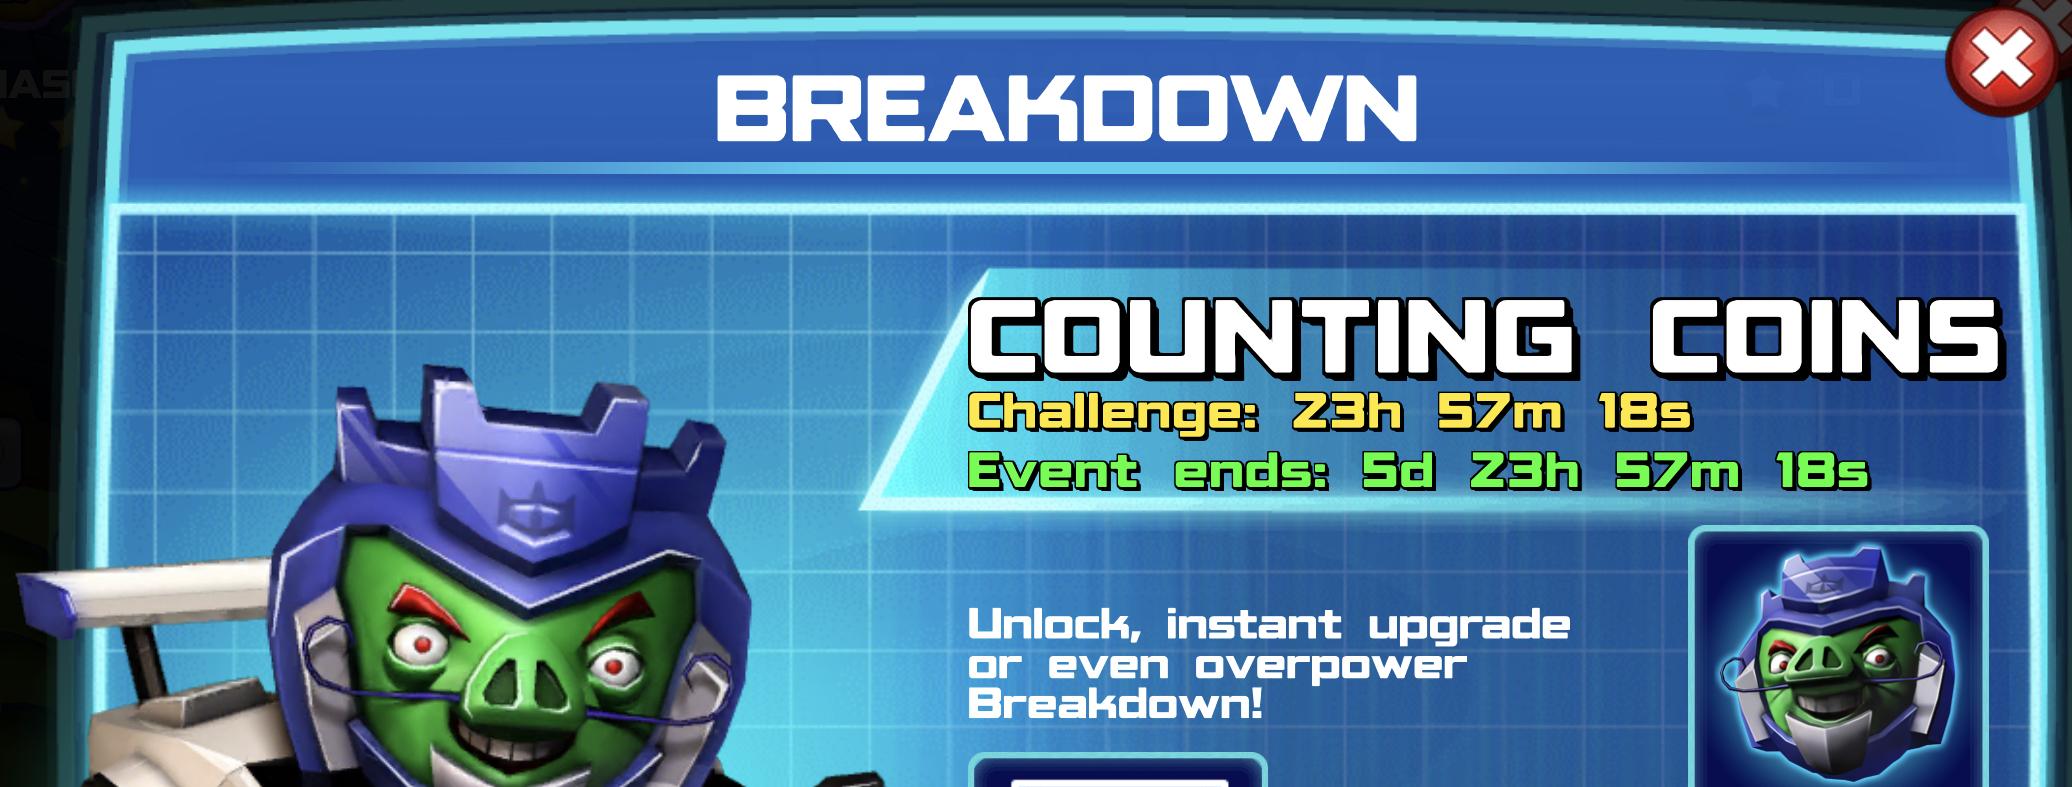 The event banner for Breakdown